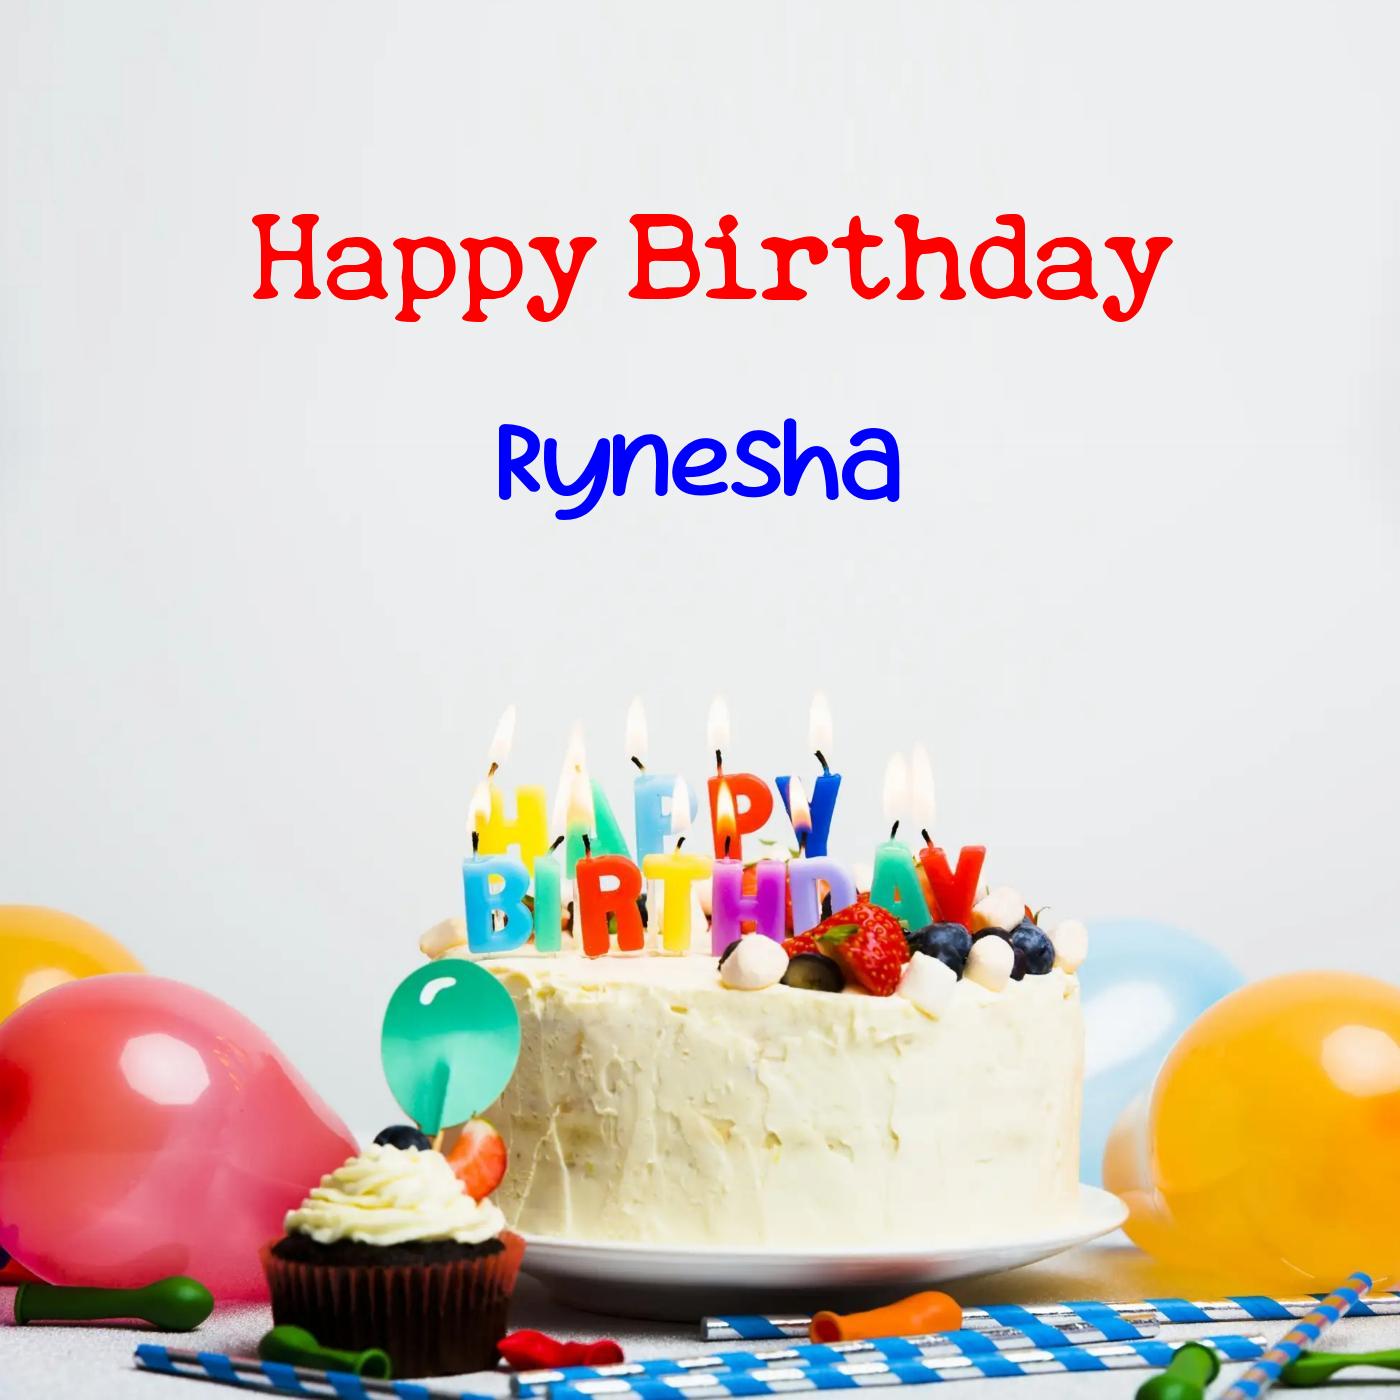 Happy Birthday Rynesha Cake Balloons Card